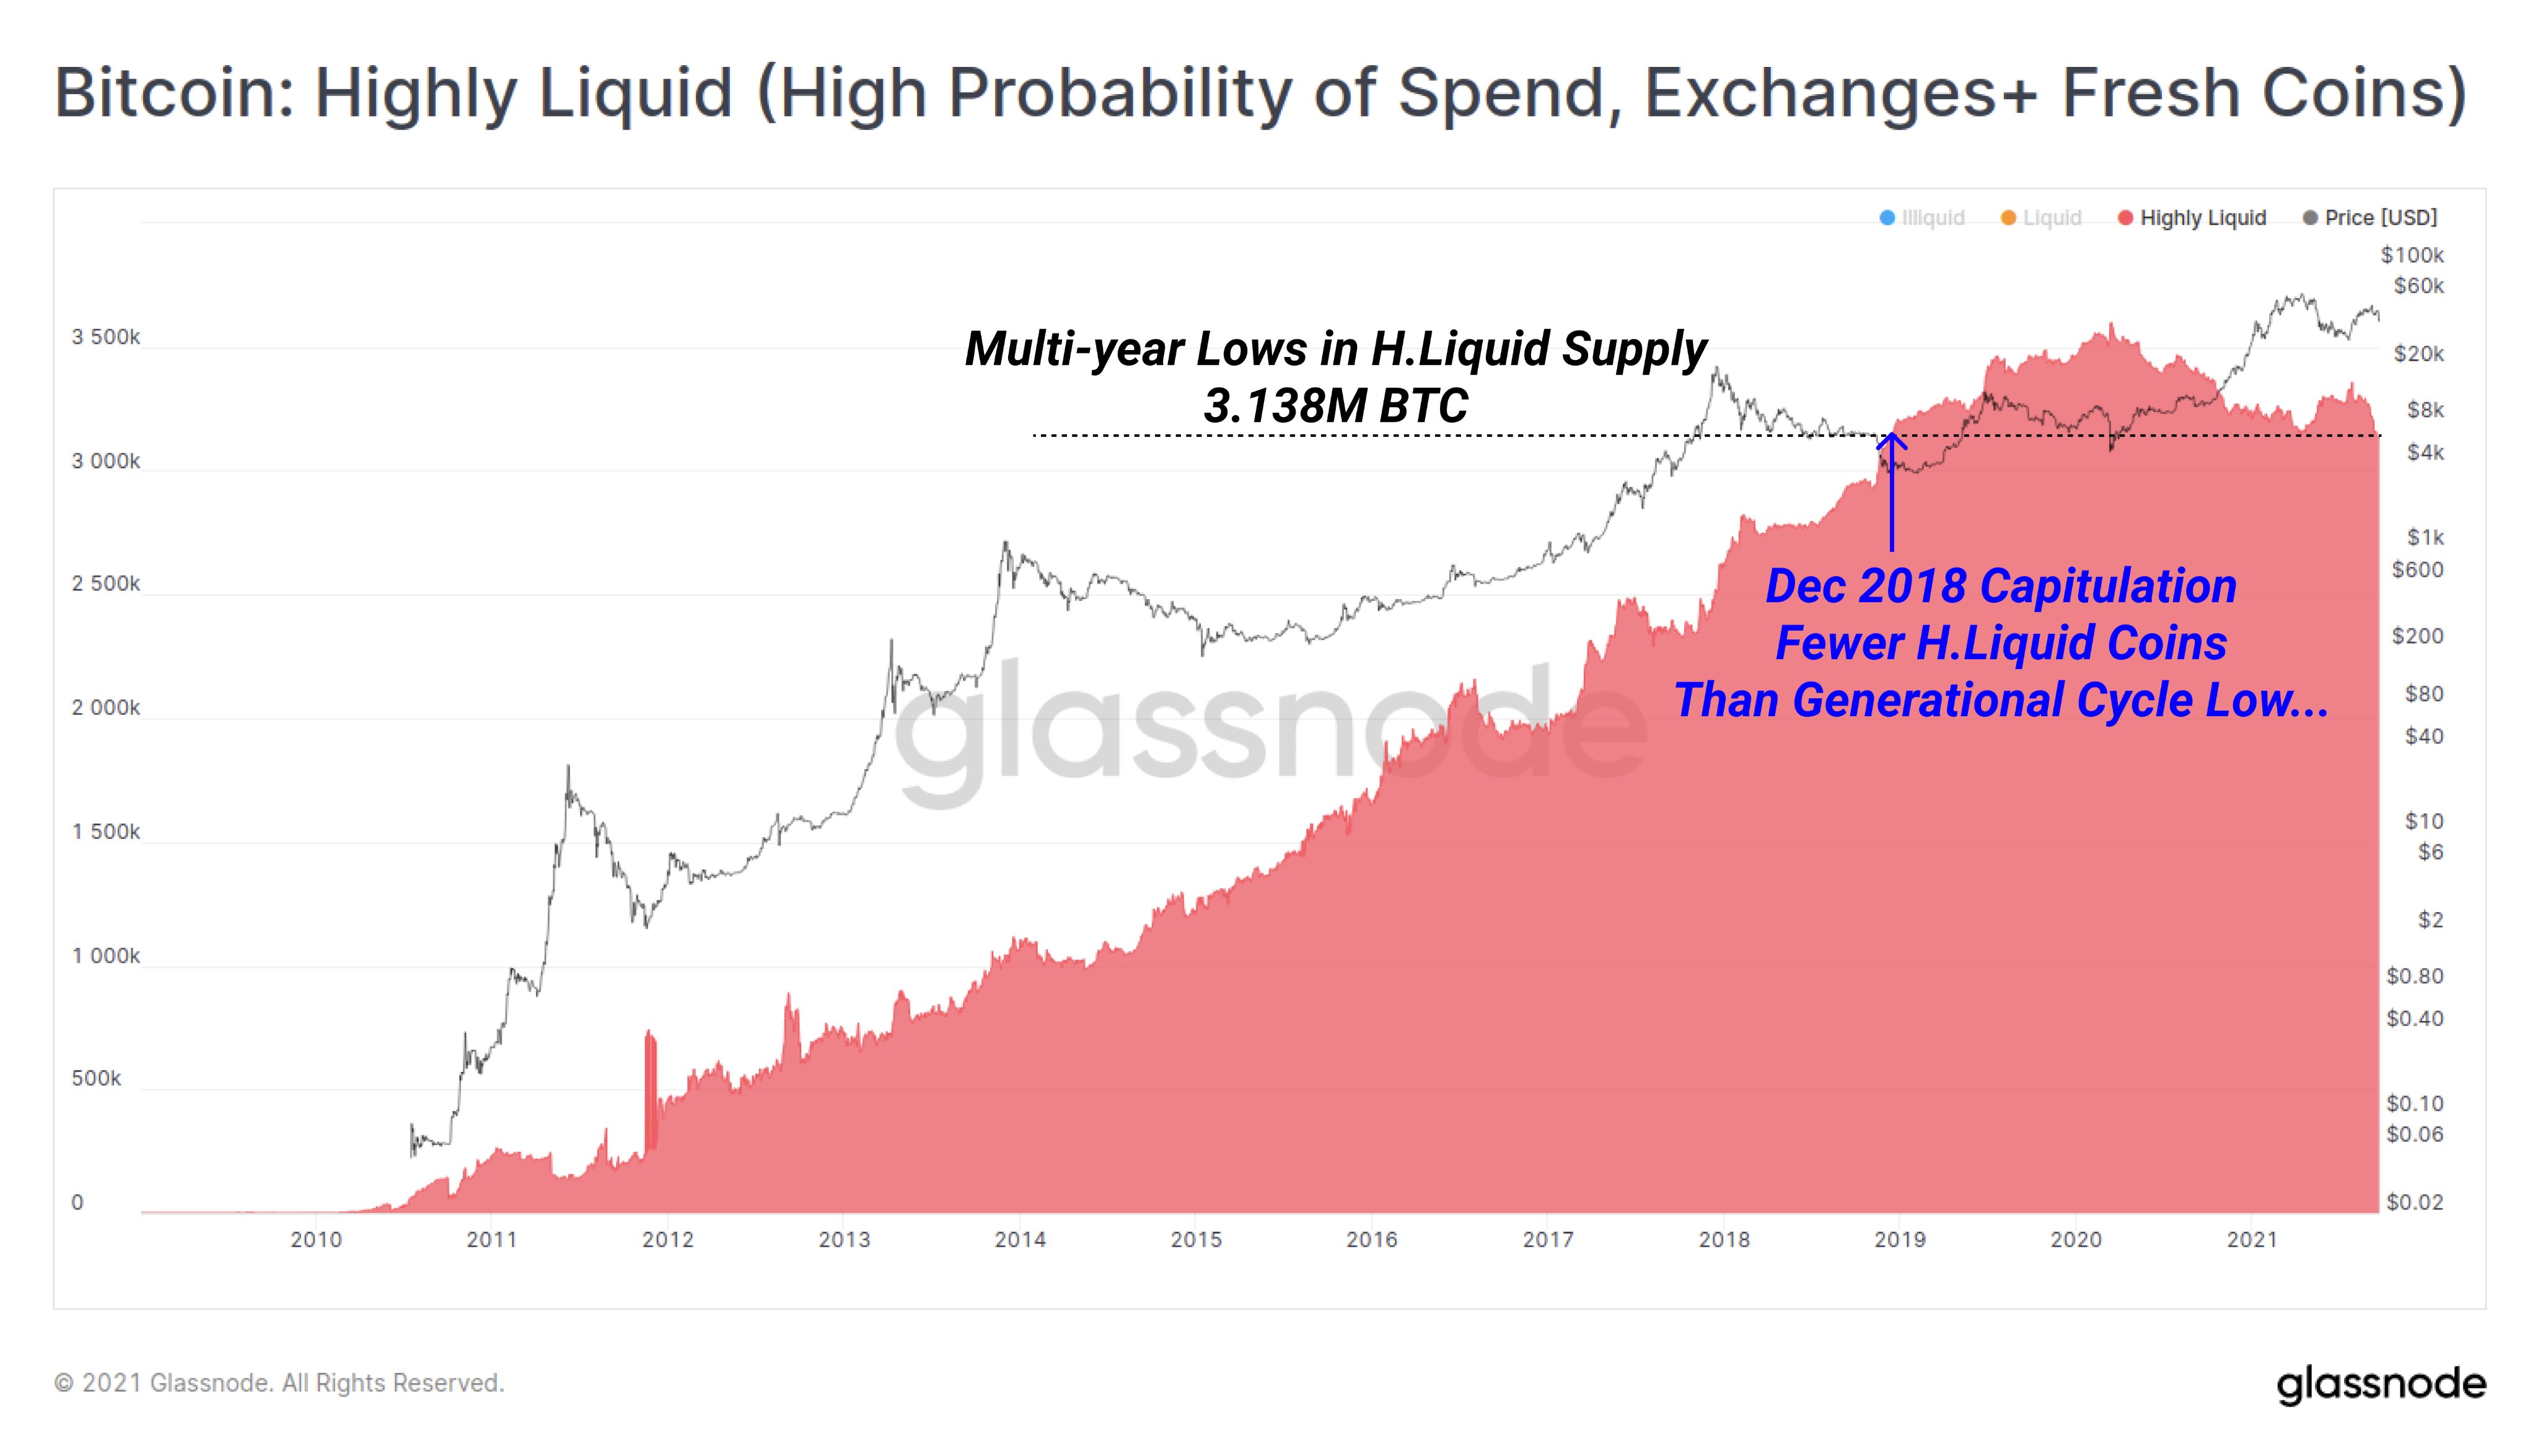 Bitcoin's highly liquid supply